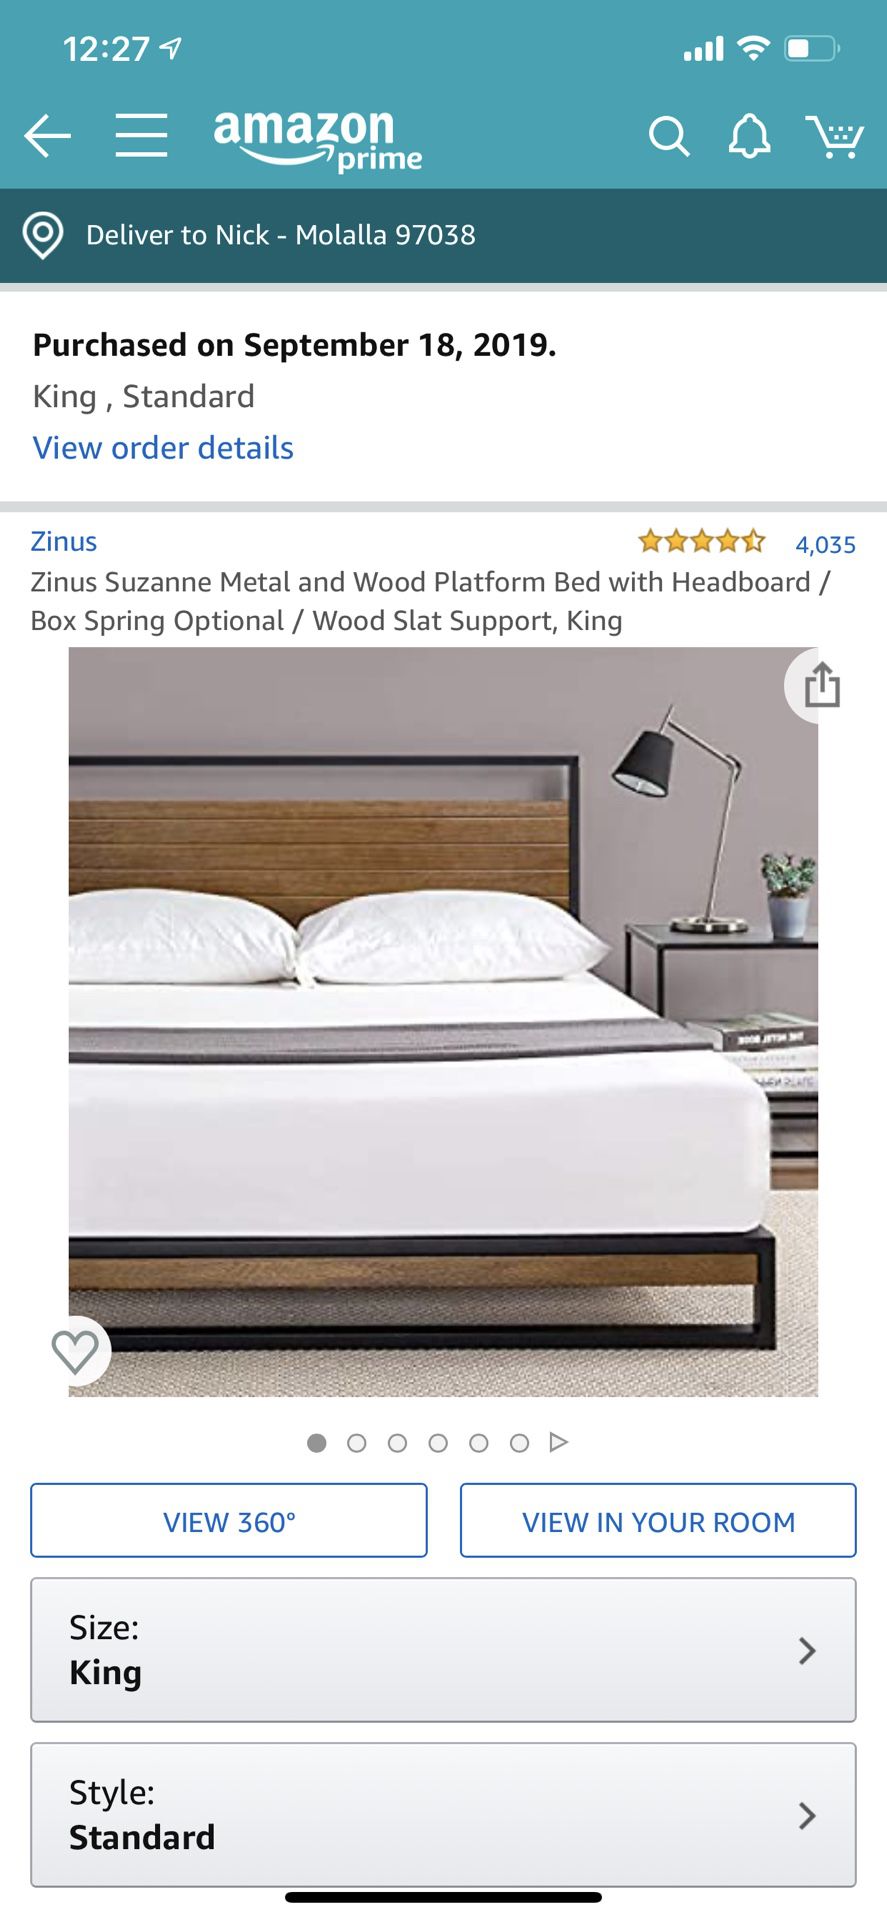 King size bed & mattress